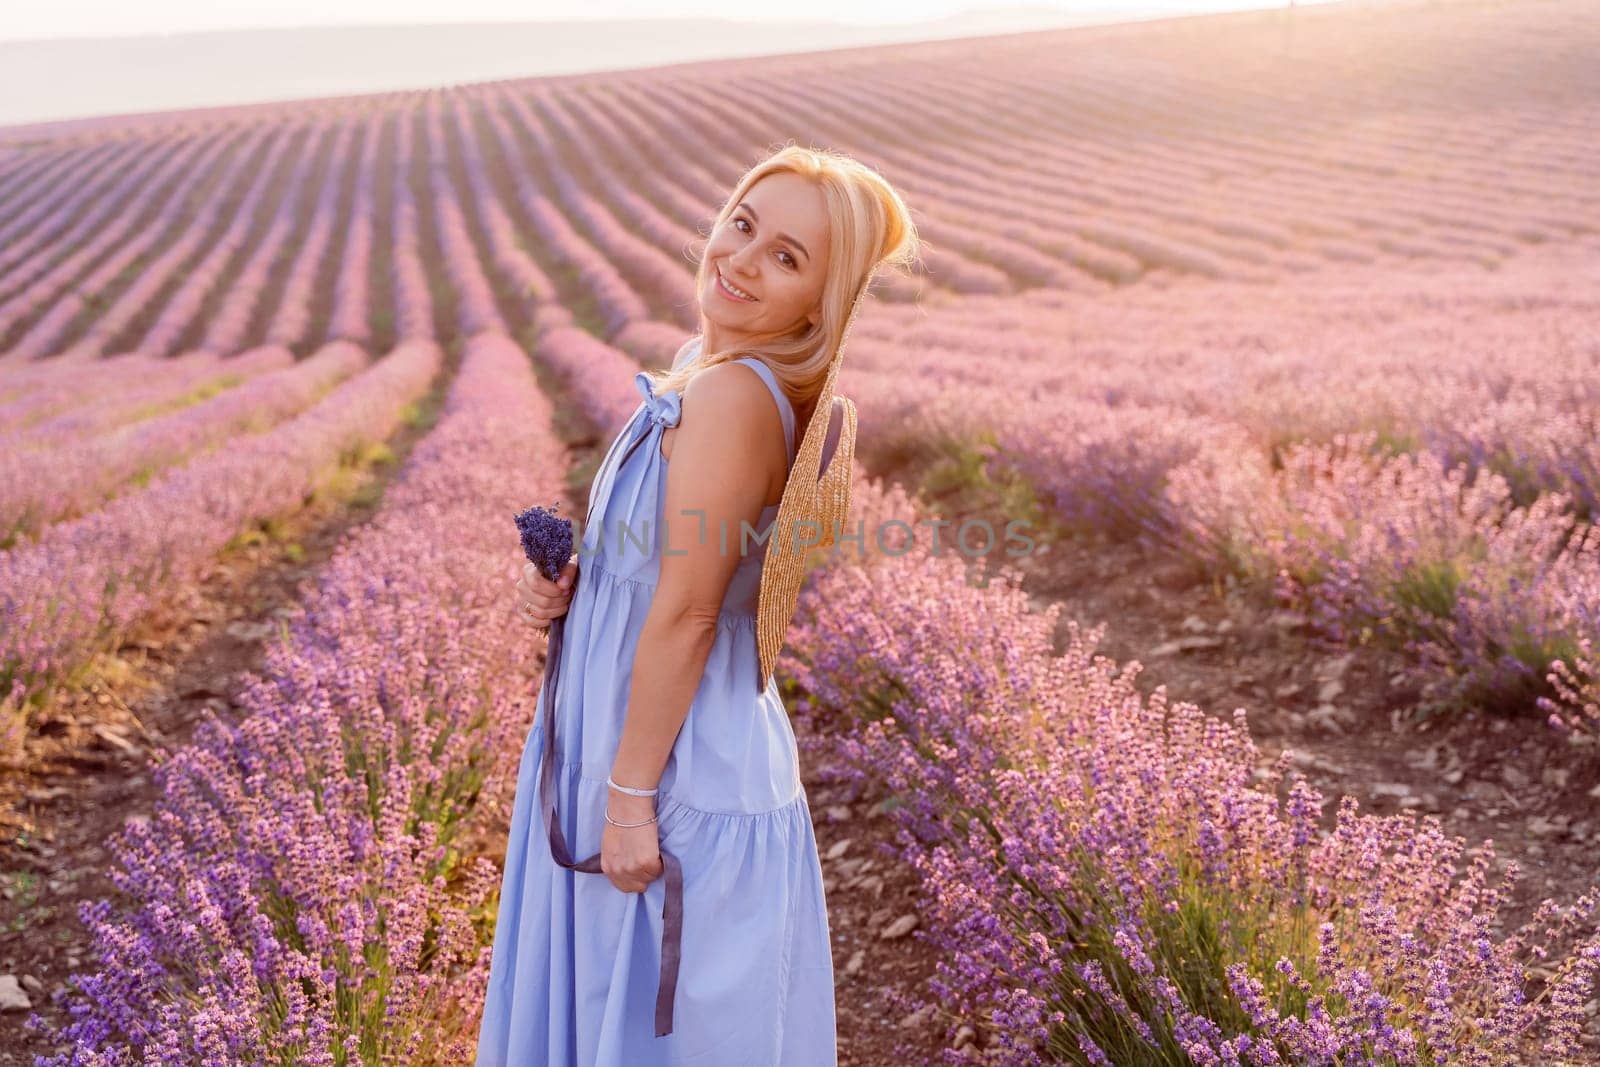 Woman lavender field sunset. Romantic woman walks through the la by Matiunina